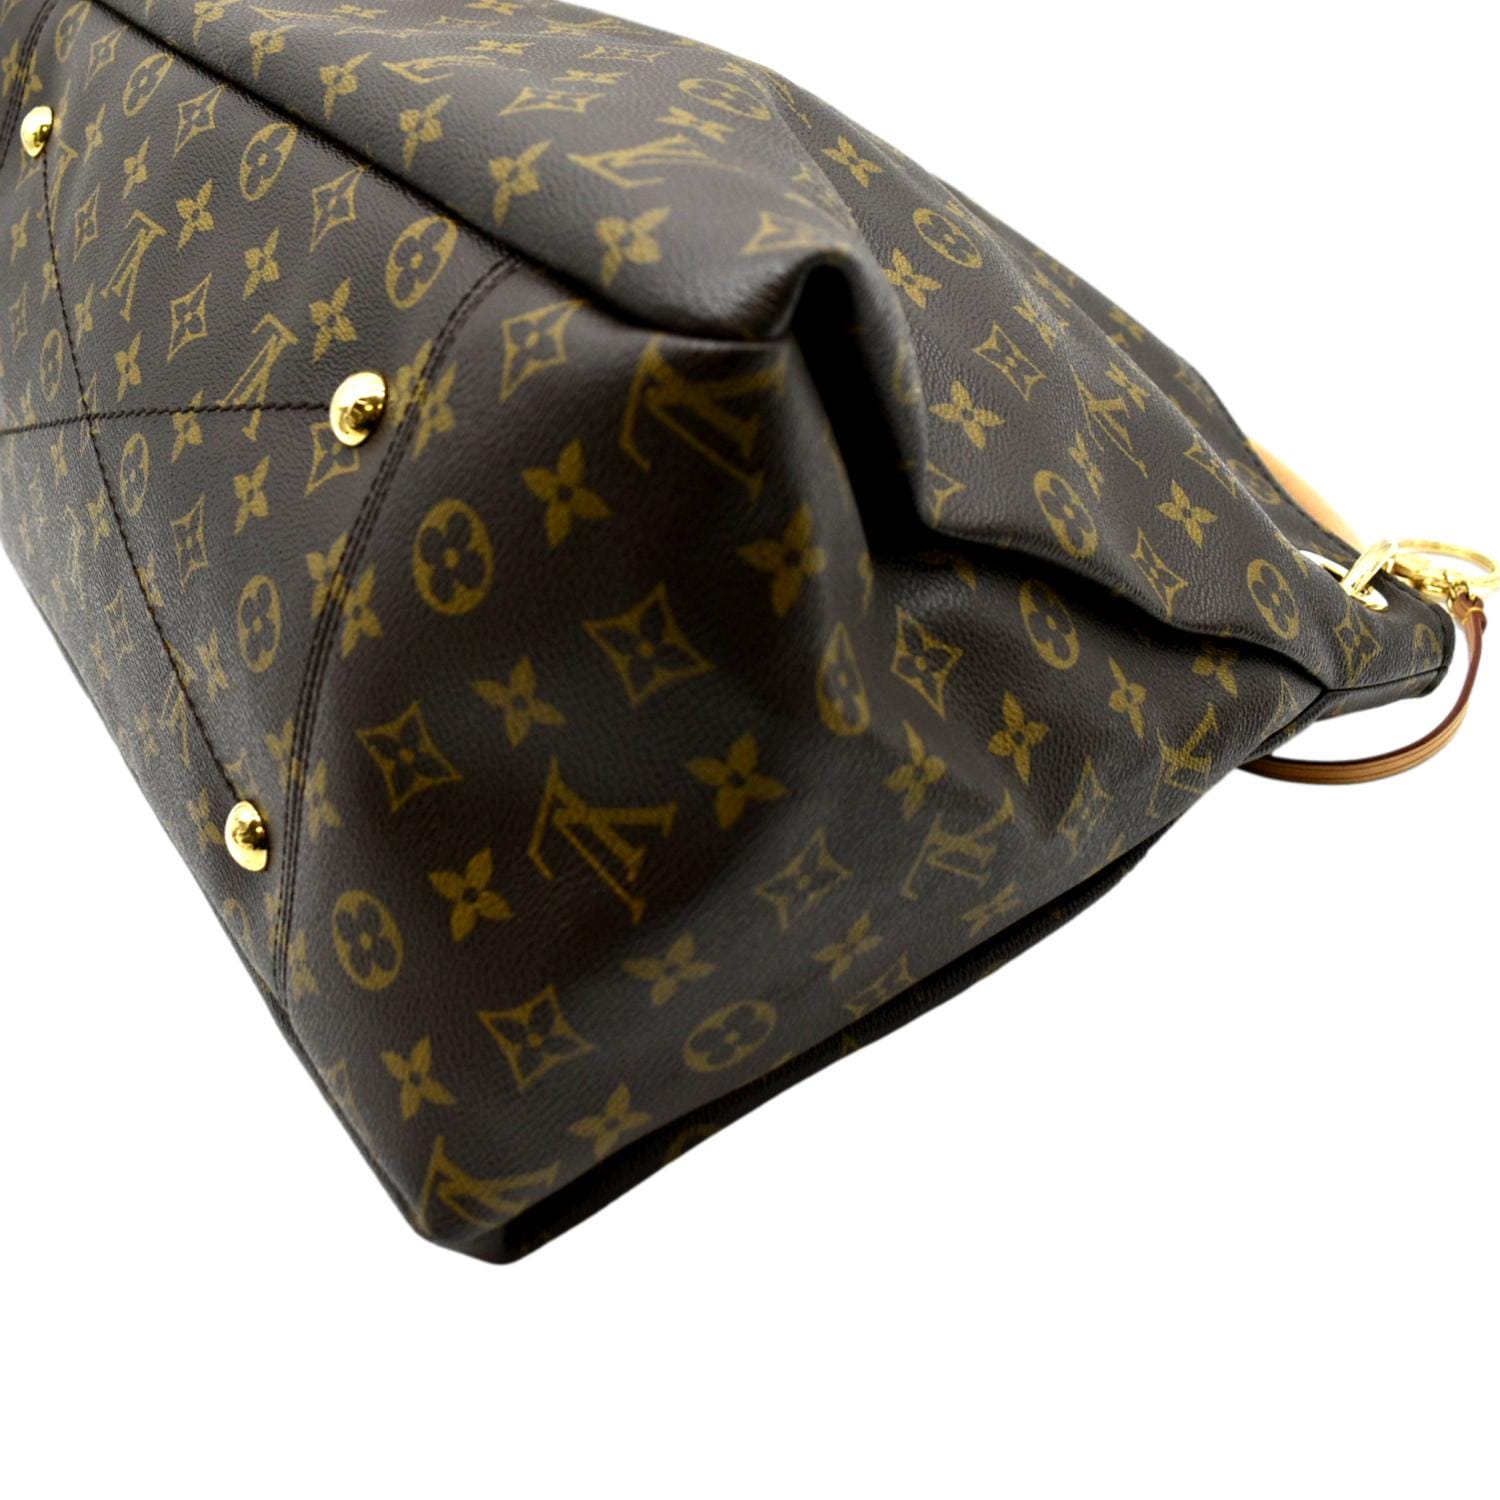 Louis Vuitton Monogram Artsy MM Hobo Bag 427lv61